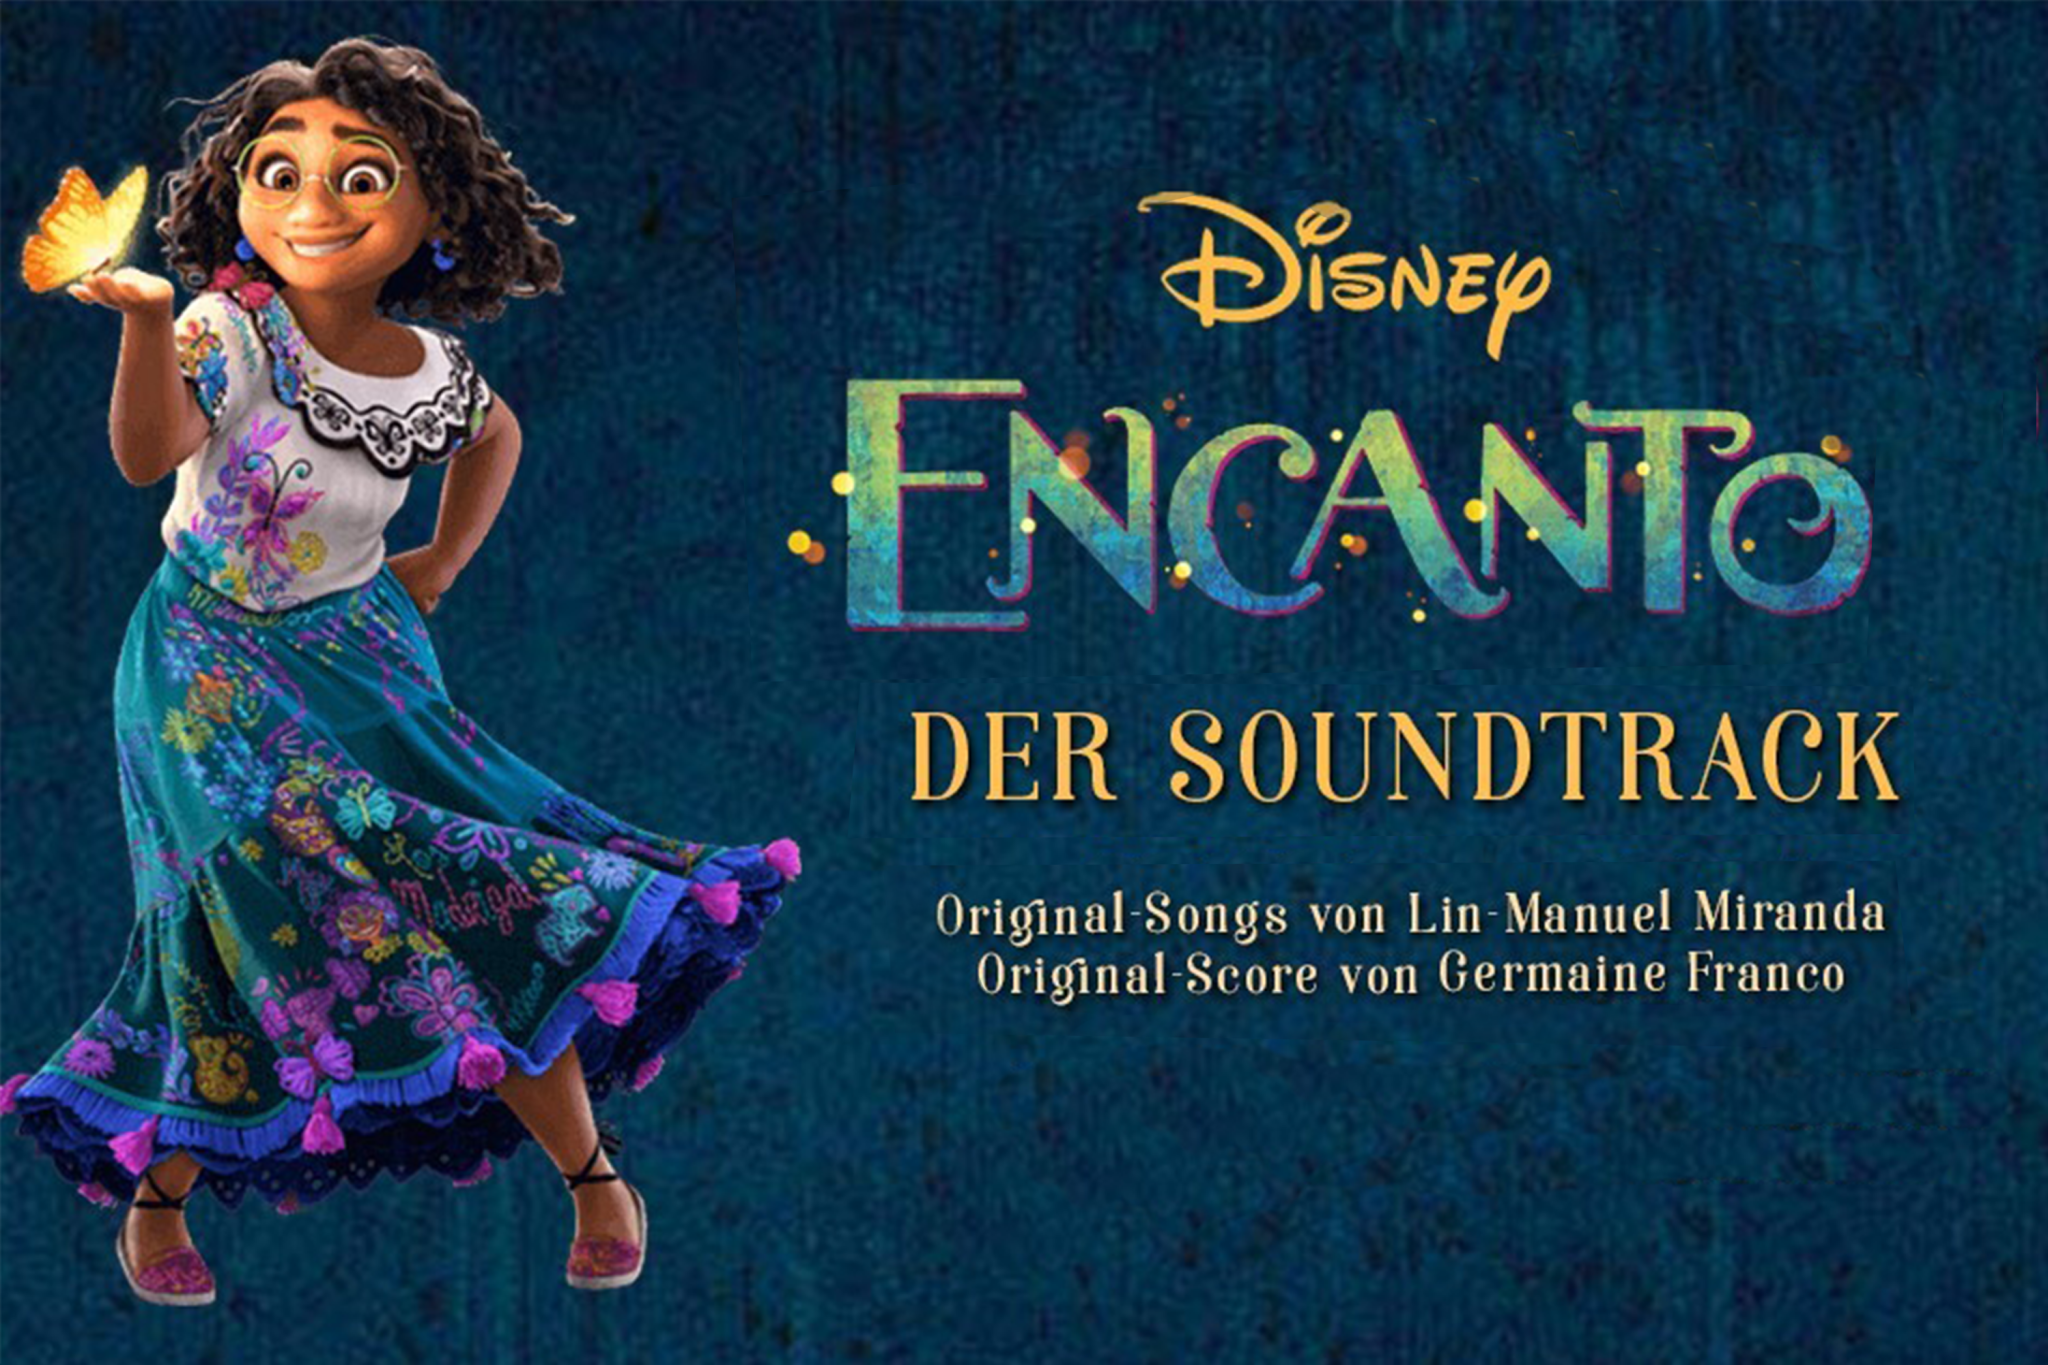 Der Soundtrack zum Disney Film Encanto